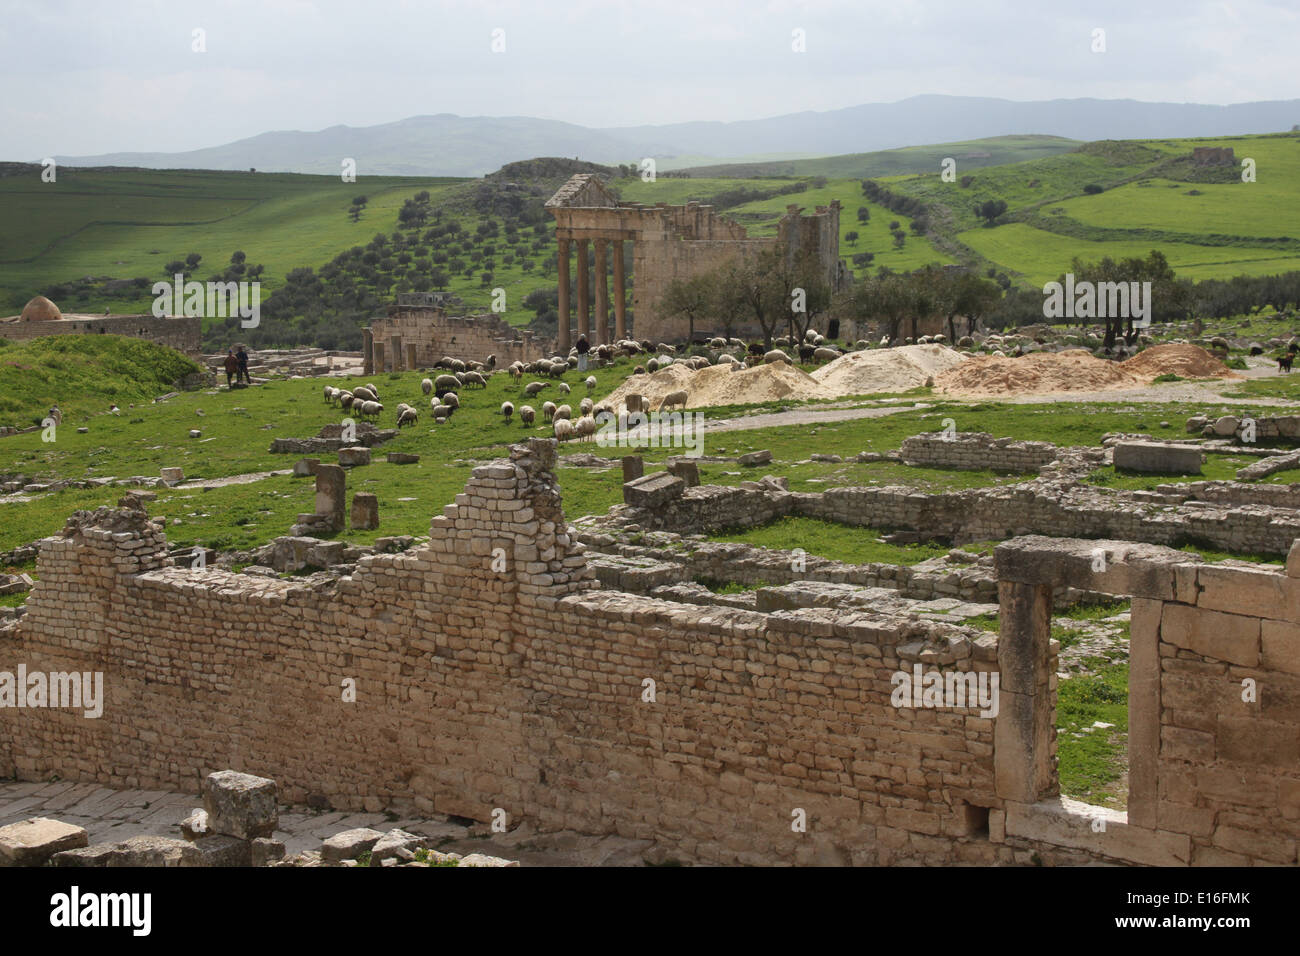 View of the Roman city of Dougga and the surrounding countryside, Tunisia Stock Photo